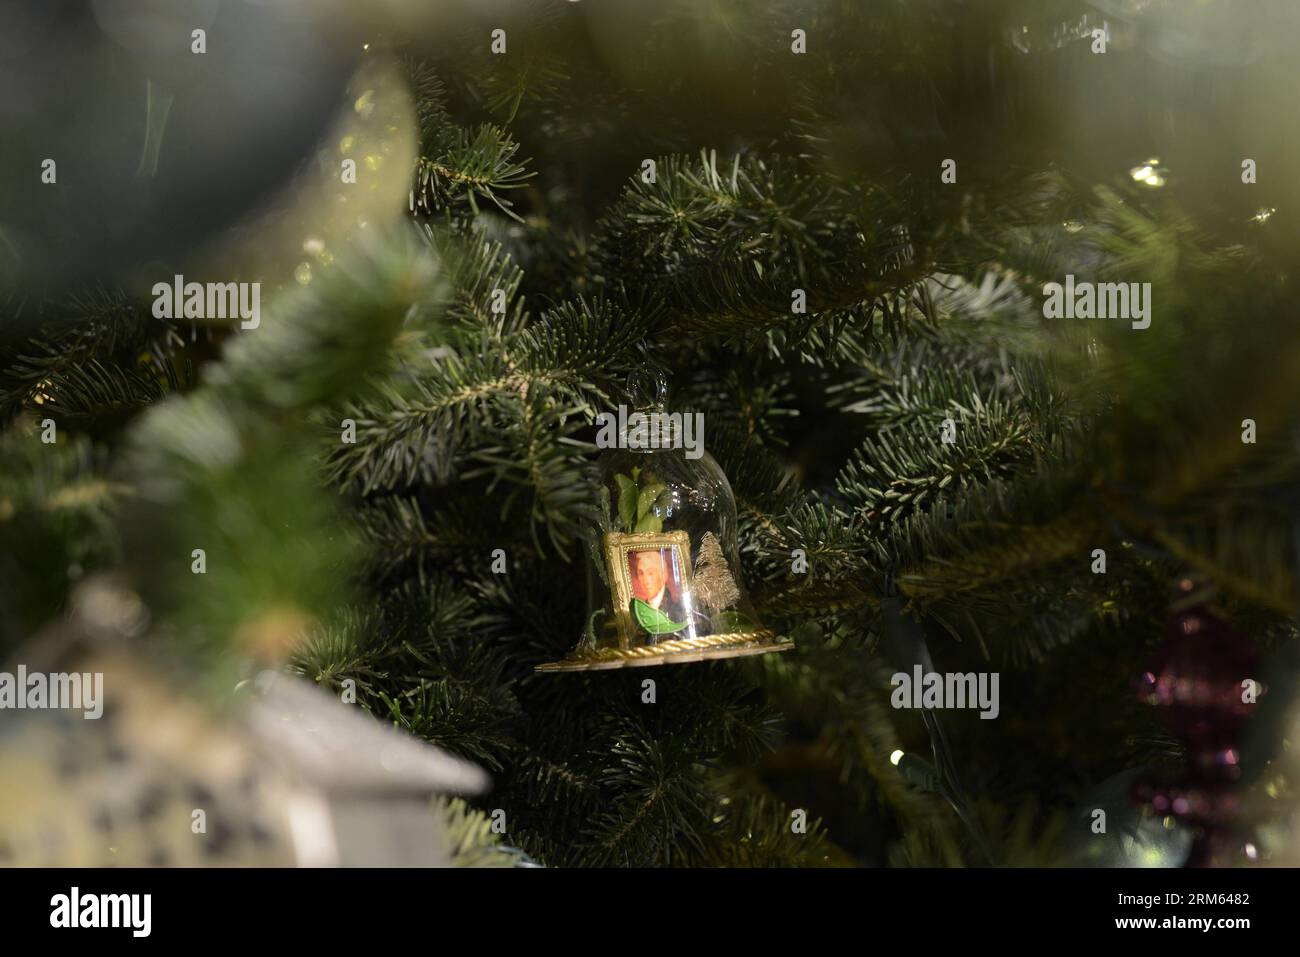 Bildnummer: 60794961  Datum: 04.12.2013  Copyright: imago/Xinhua     (131204) -- WASHINGTON D.C., Dec. 4, 2013 (Xinhua) -- A decoration is seen on a Christmas tree in the East Room of the White House in Washington D.C., capital of the United States, Dec. 4, 2013, during the White House Christmas decorations media viewing. (Xinhua/Zhang Jun) US-WASHINGTON-WHITE HOUSE-CHRISTMAS PUBLICATIONxNOTxINxCHN Gesellschaft Weihnachten Weihnachtsdeko x2x xac 2013 quer o0 Weihnachten Weihnachtszeit weihnachtlich Deko Weihnachtsbaum Detail Christbaumschmuck Stock Photo